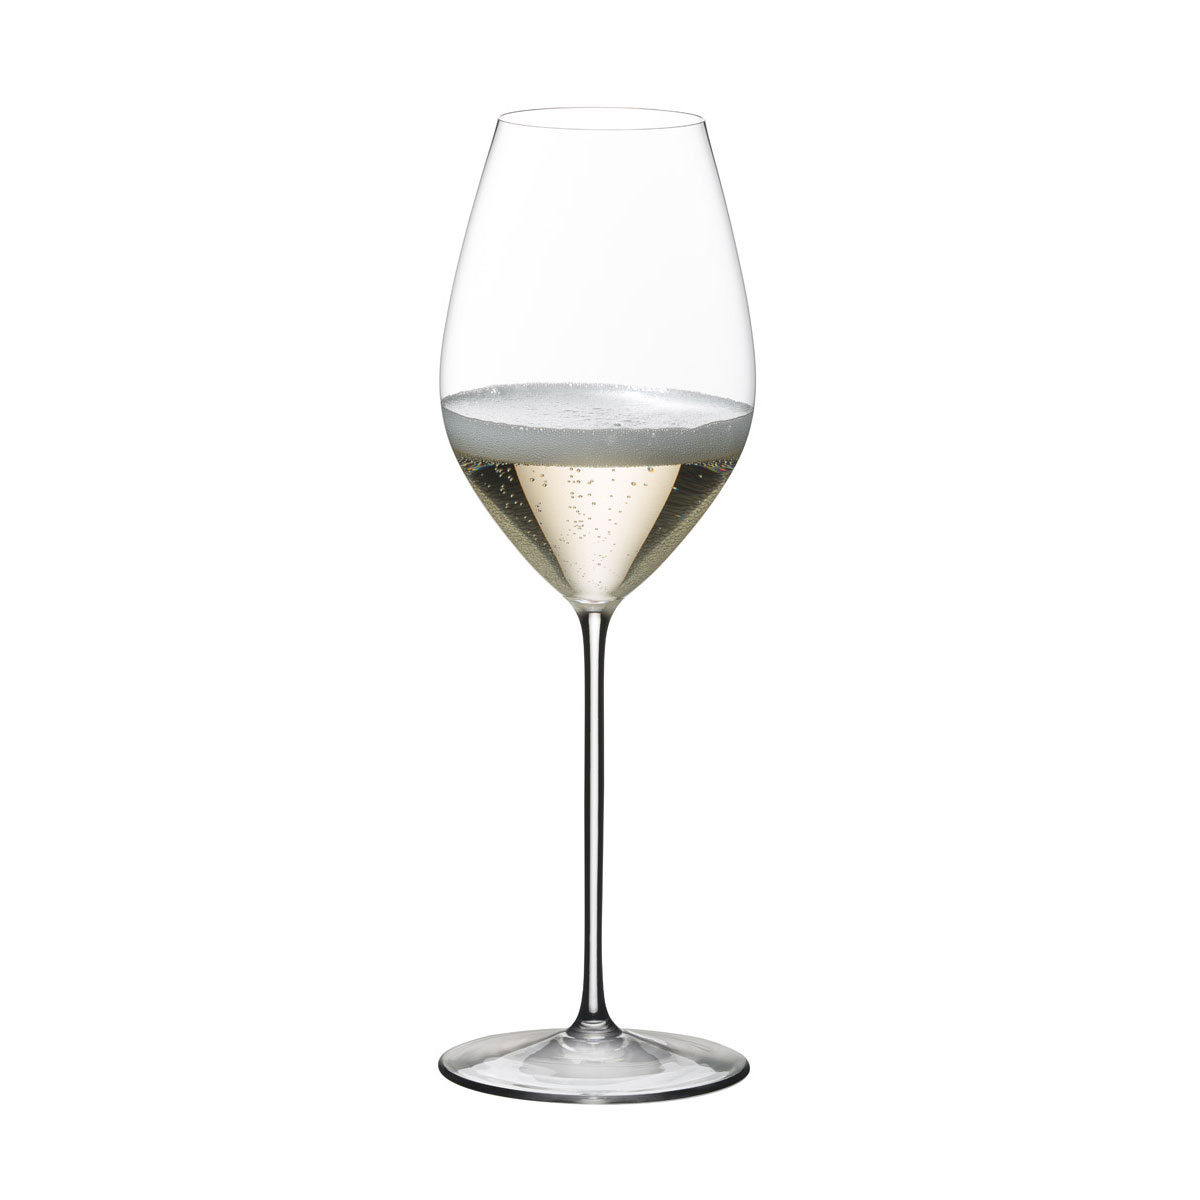 Riedel Superleggero Hand Made, Champagne Glass, Single